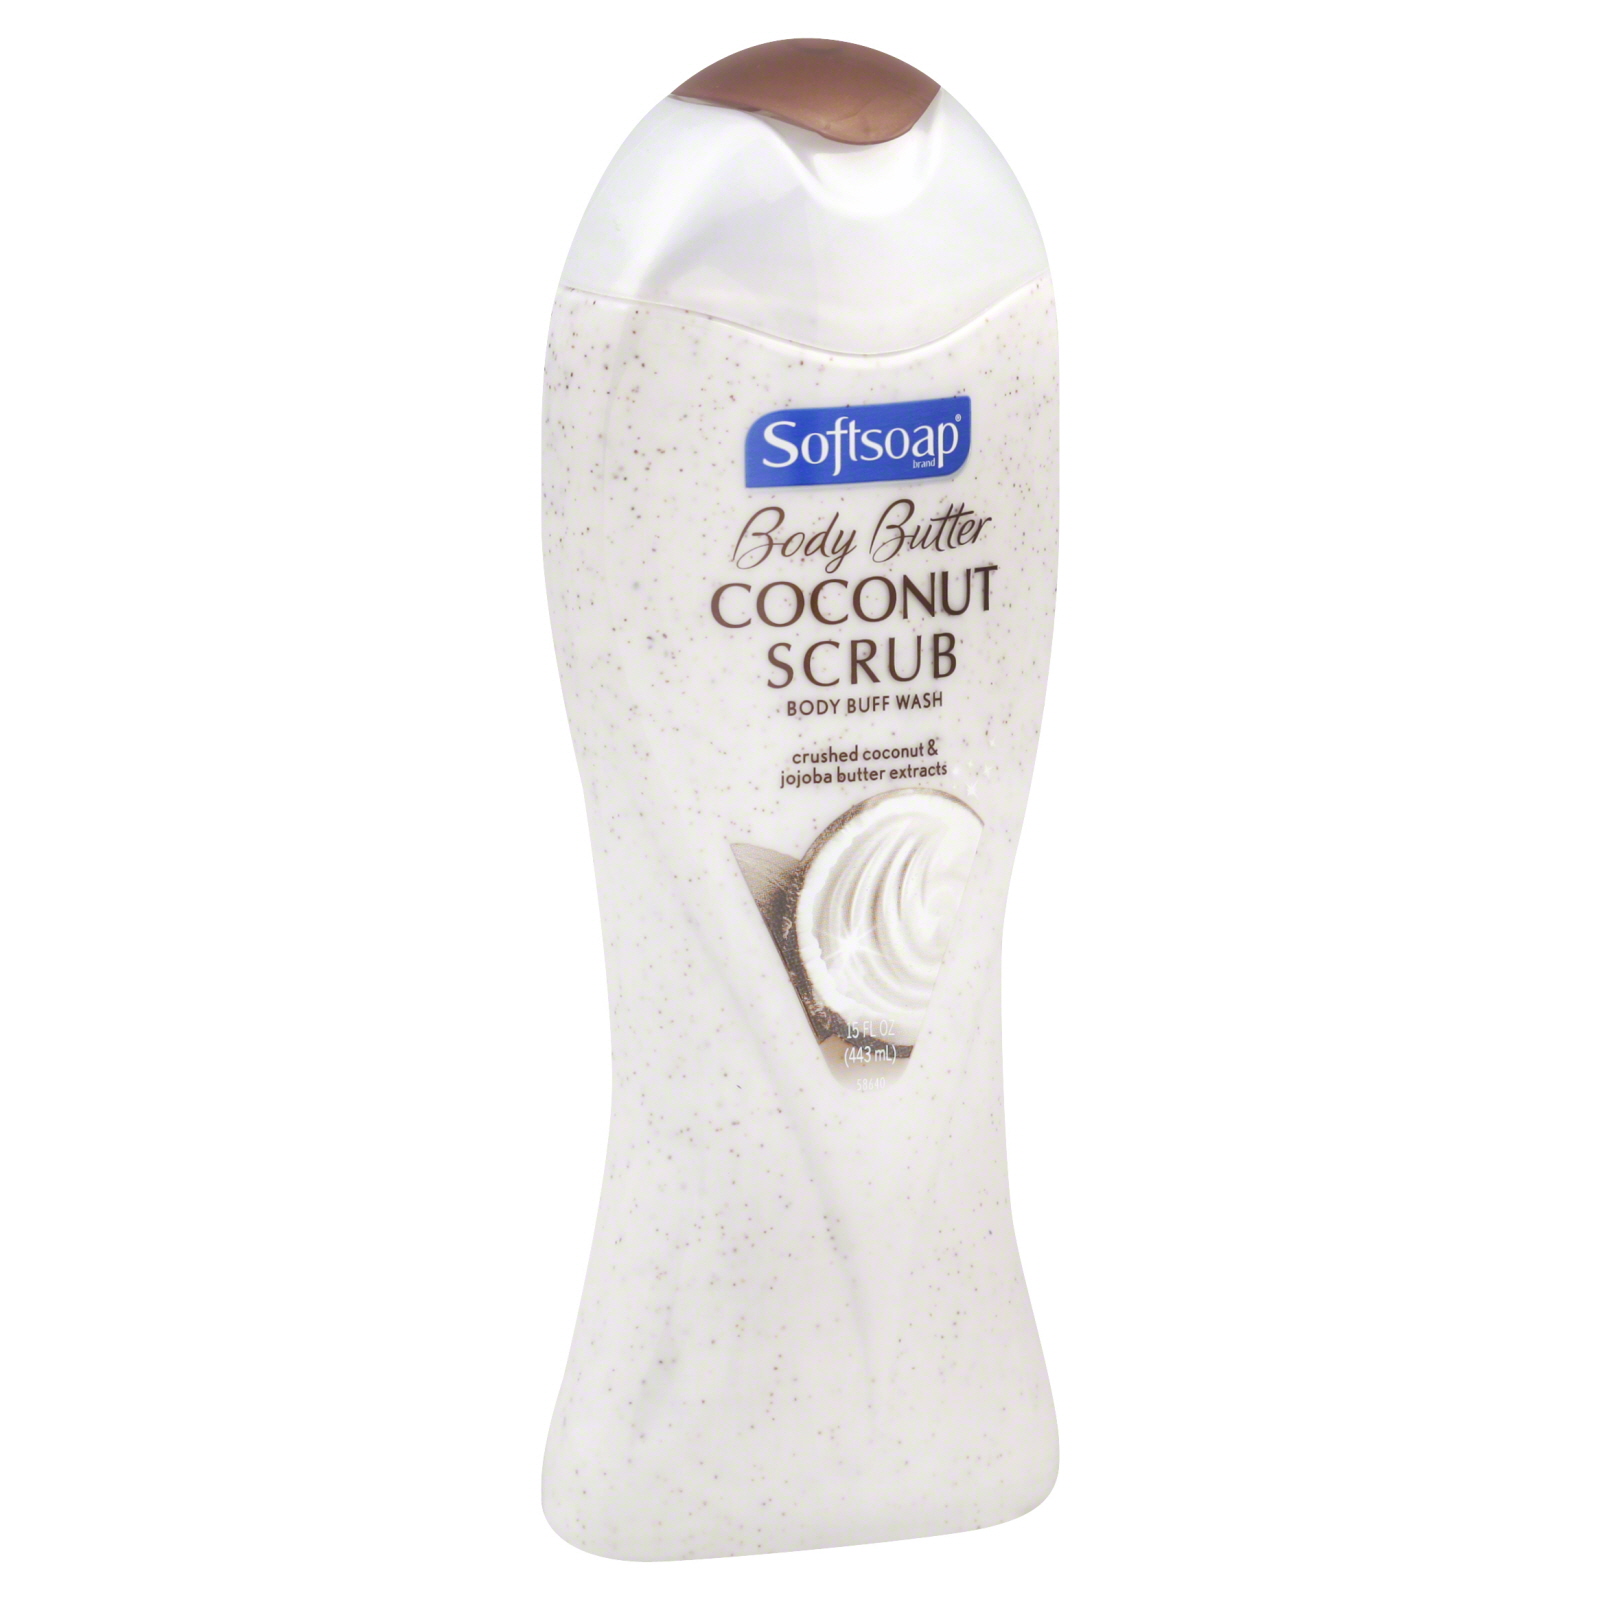 Softsoap Body Butter Scrub, Coconut, 15 fl oz (443 ml)